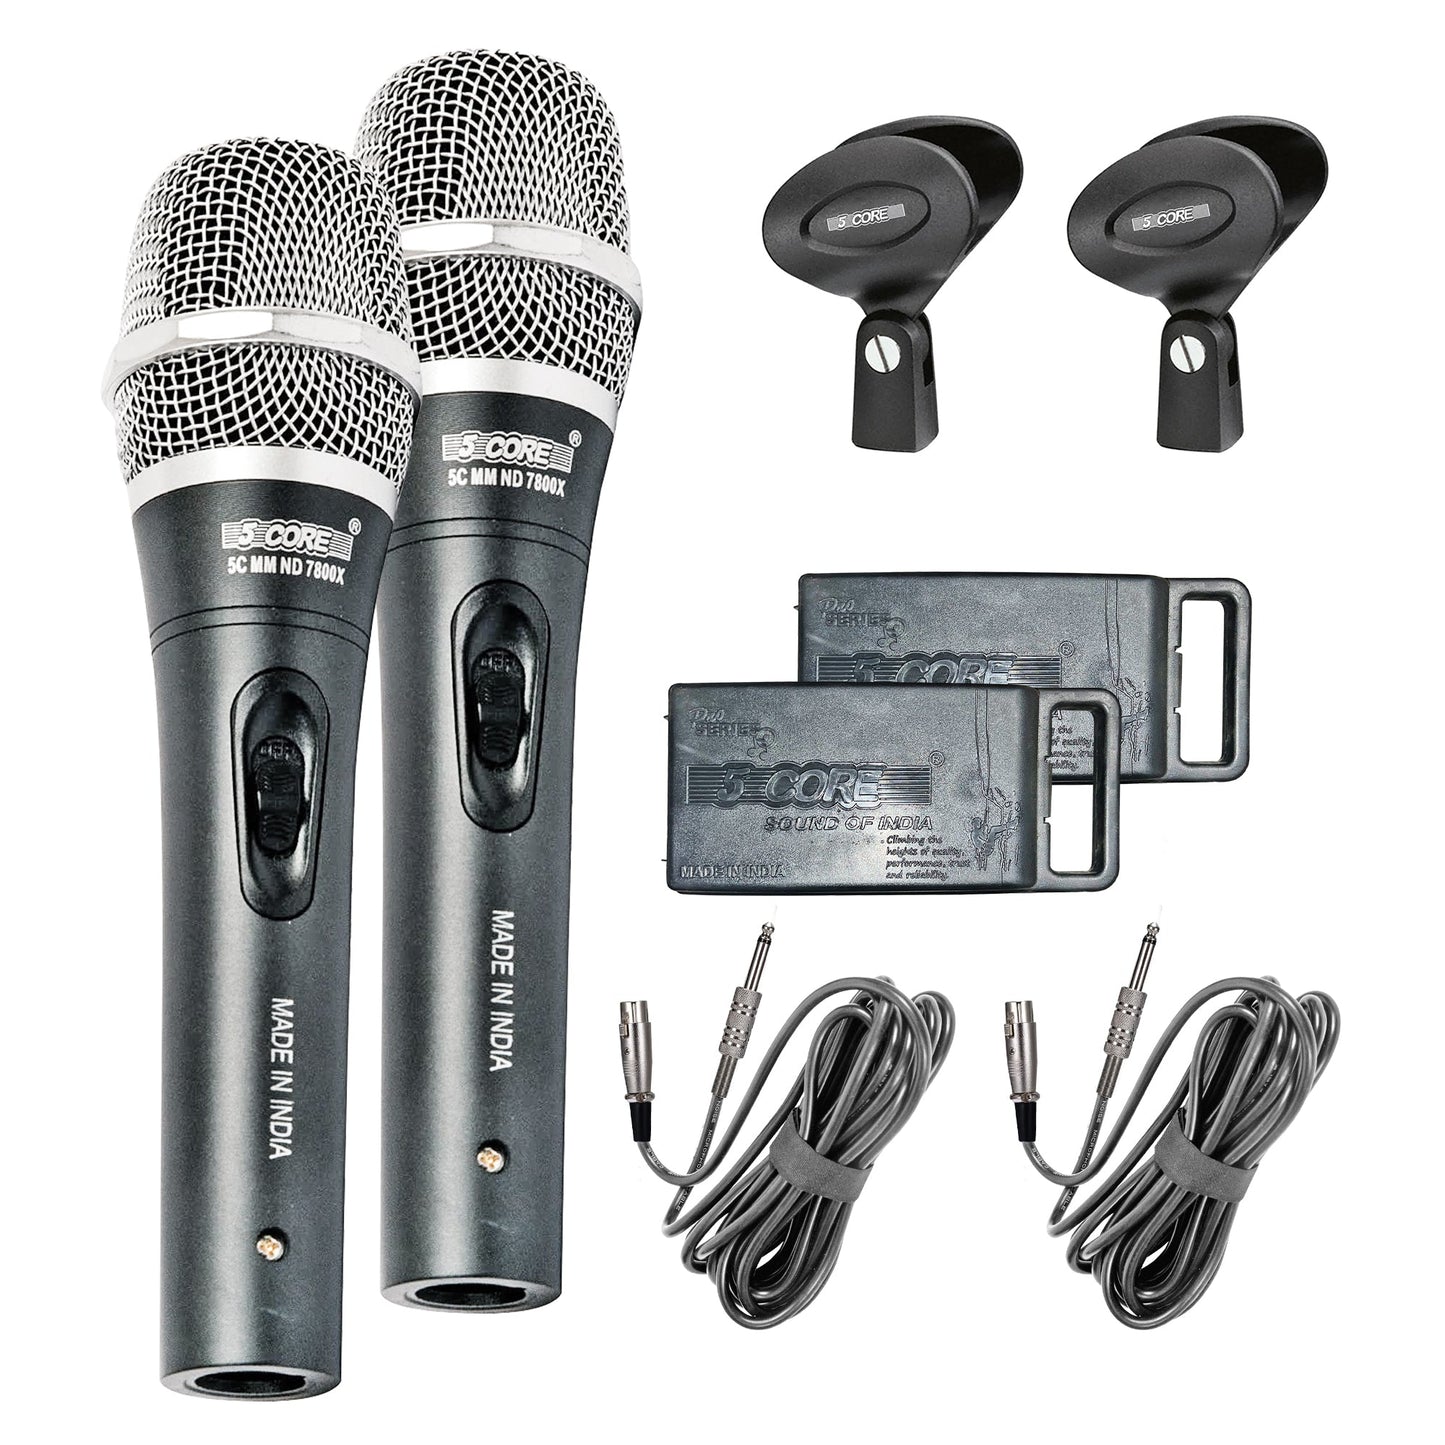 5 Core Microphone Professional Dynamic Karaoke XLR Wired Mic w ON/OFF Switch Pop Filter Cardioid Unidirectional Pickup Handheld Micrófono -ND-7800X 2PCS-0